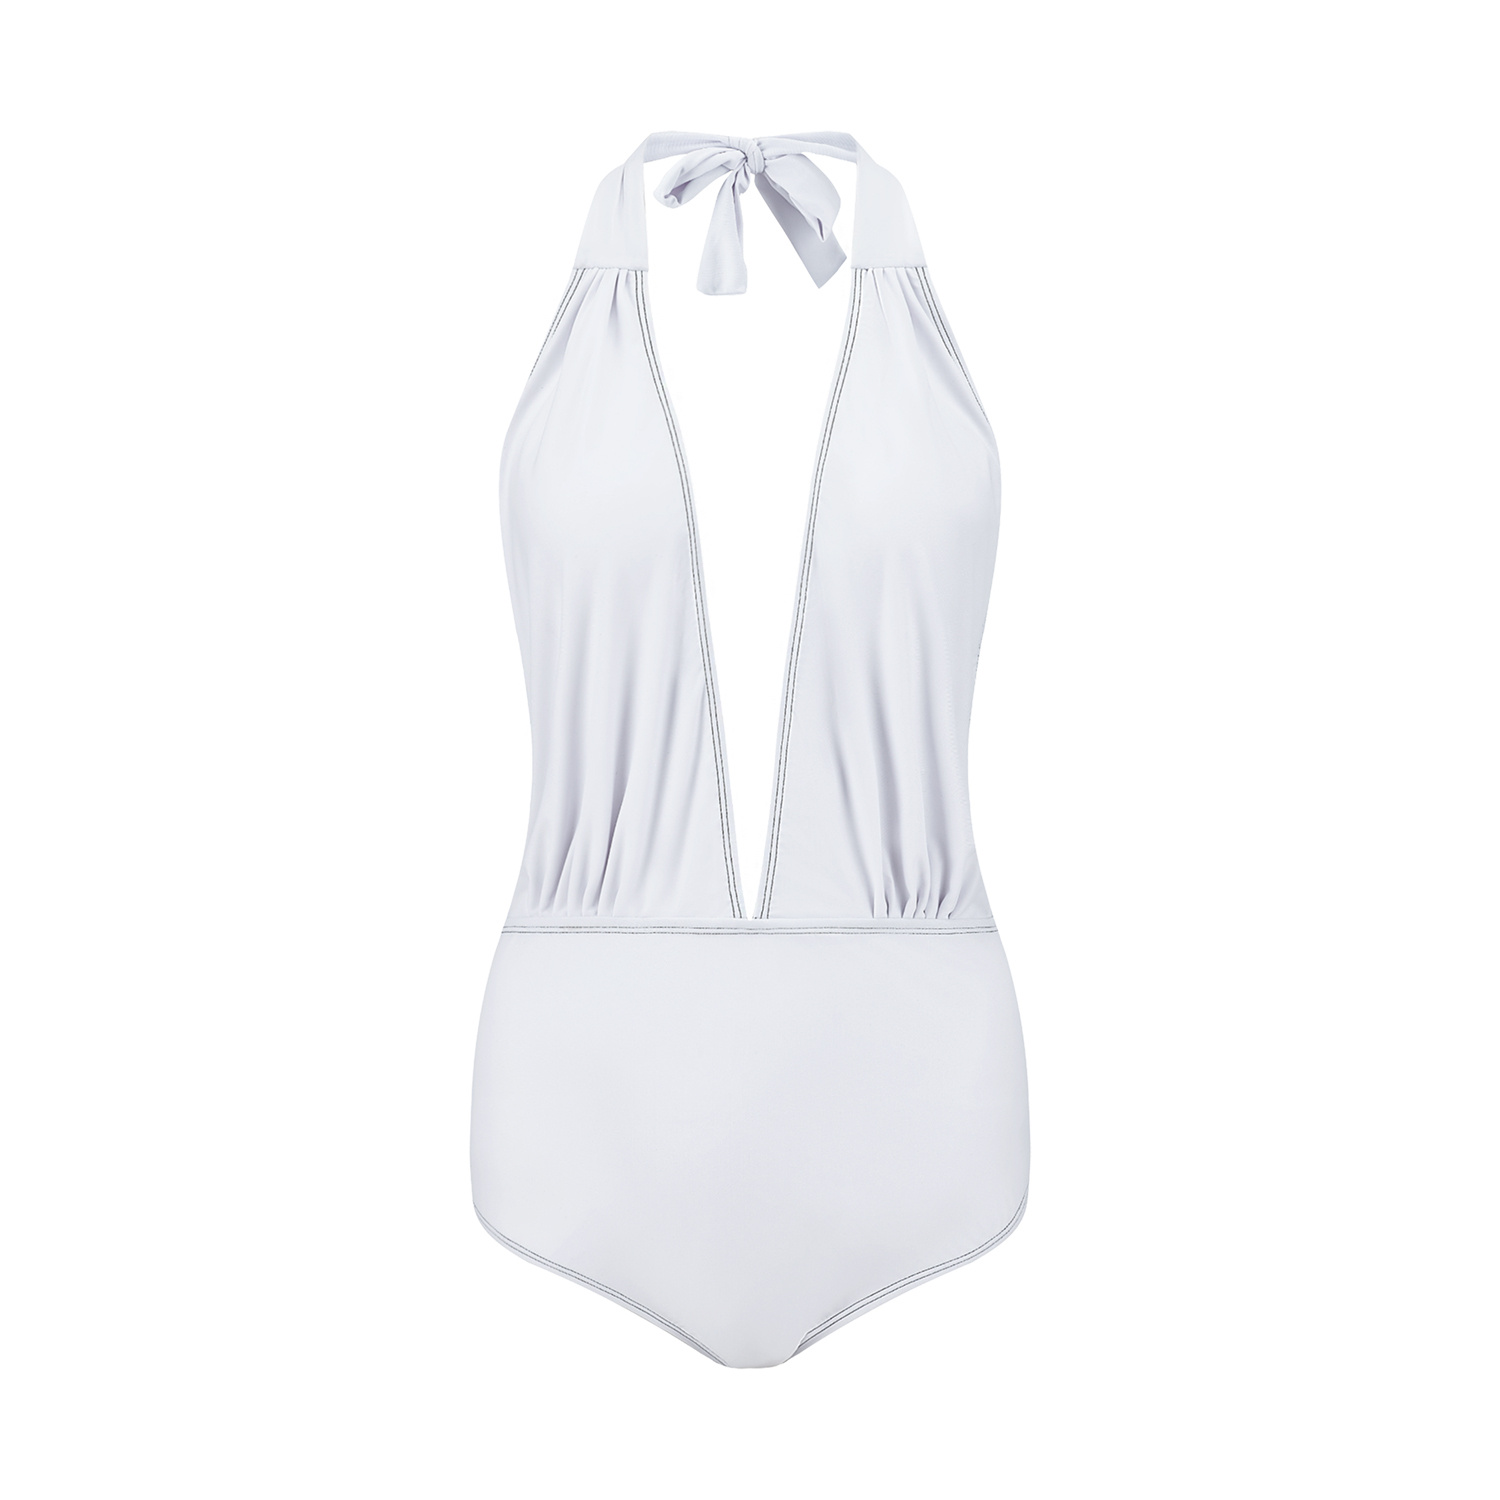 Customizable All-Over Print Women Halter One-Piece Swimsuit